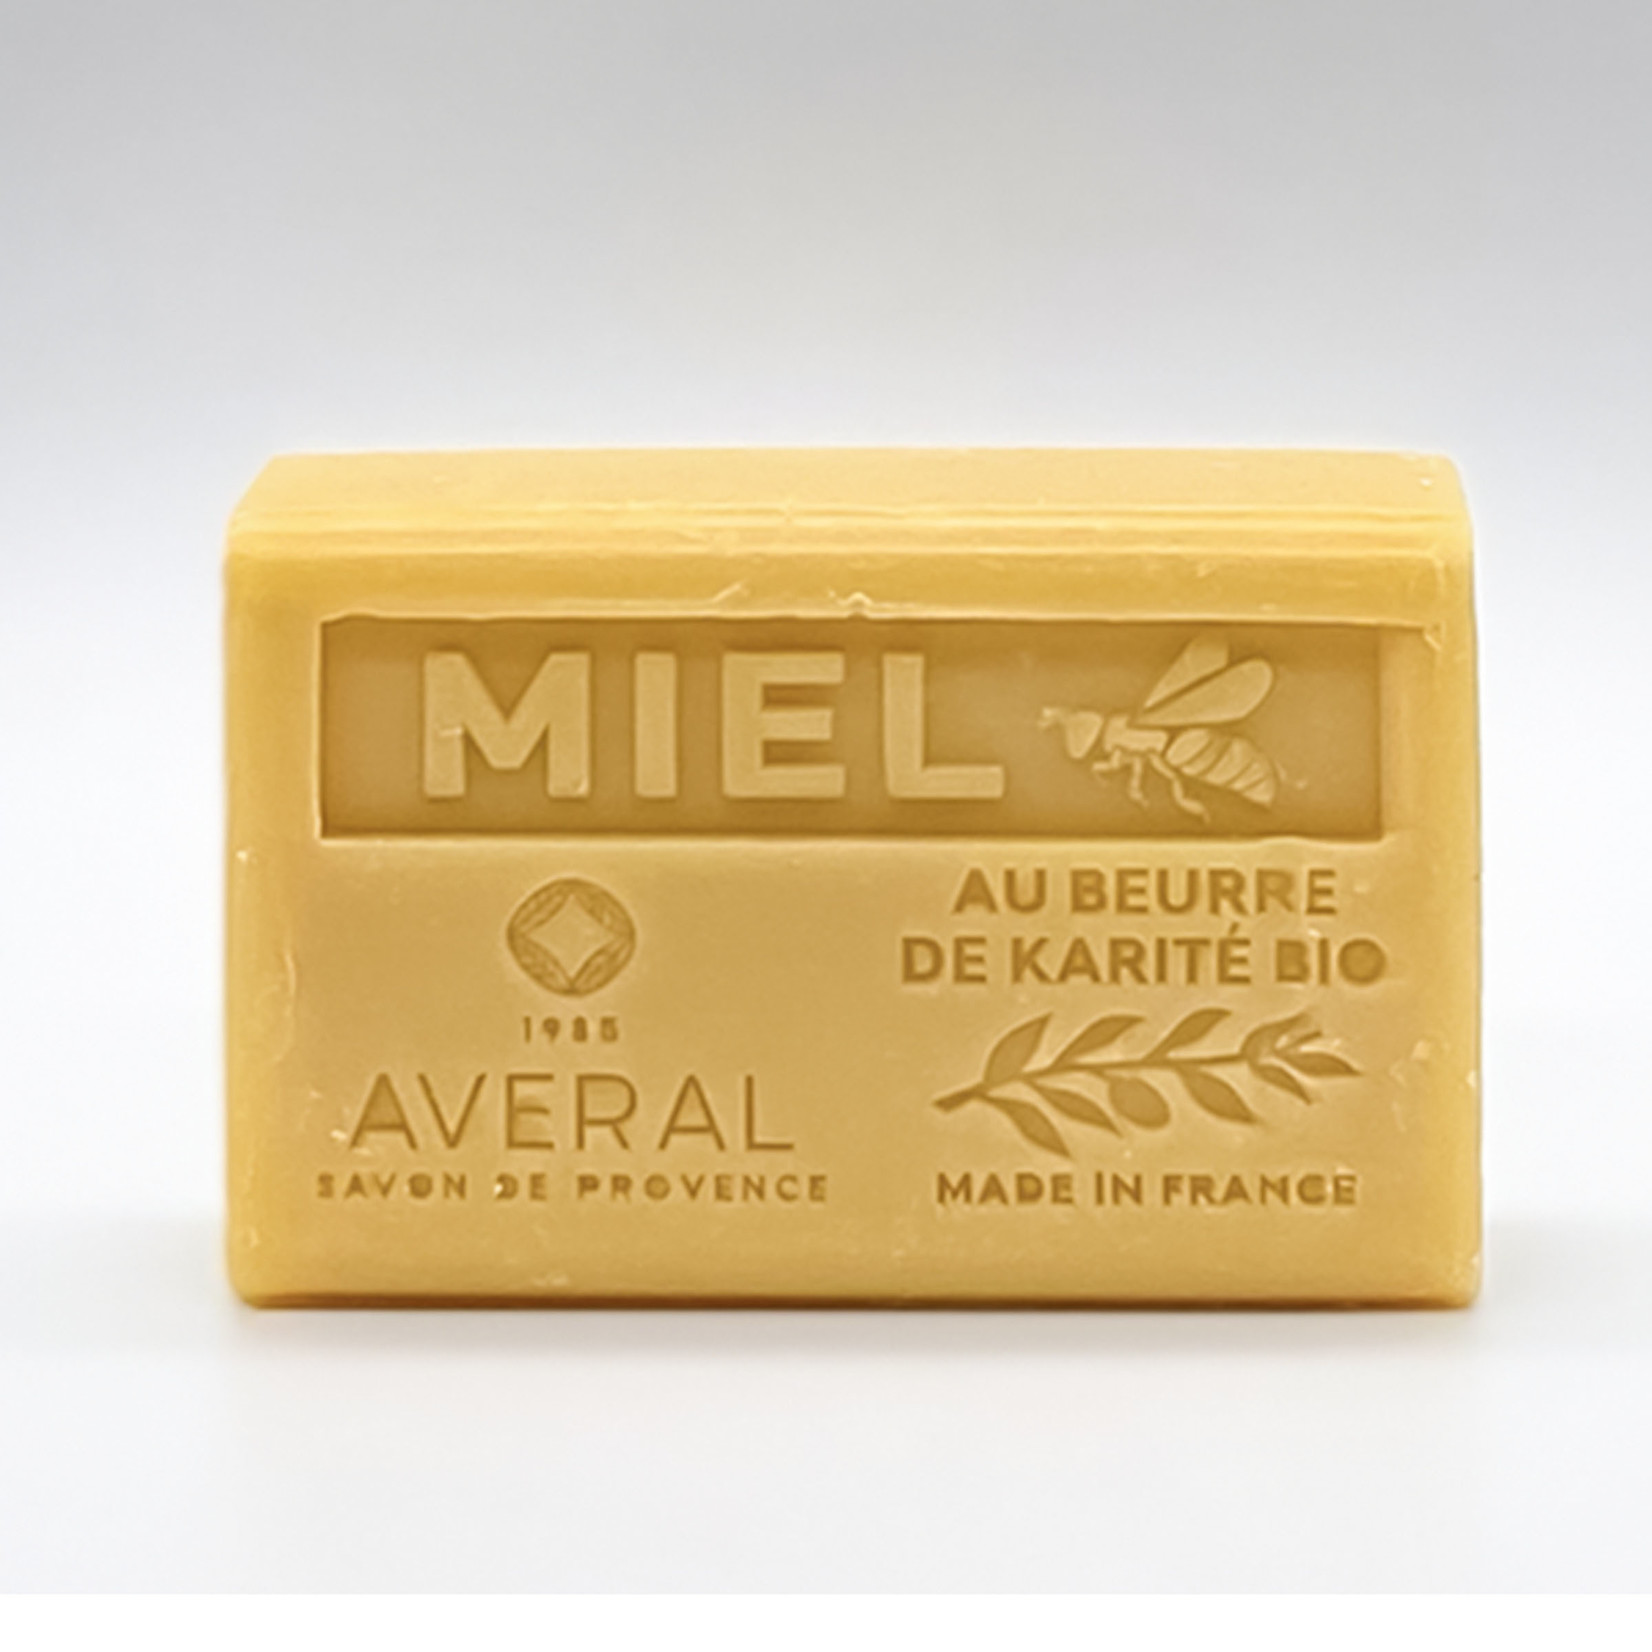 Averal Provence Honey:  Averal Provence Soap Miel